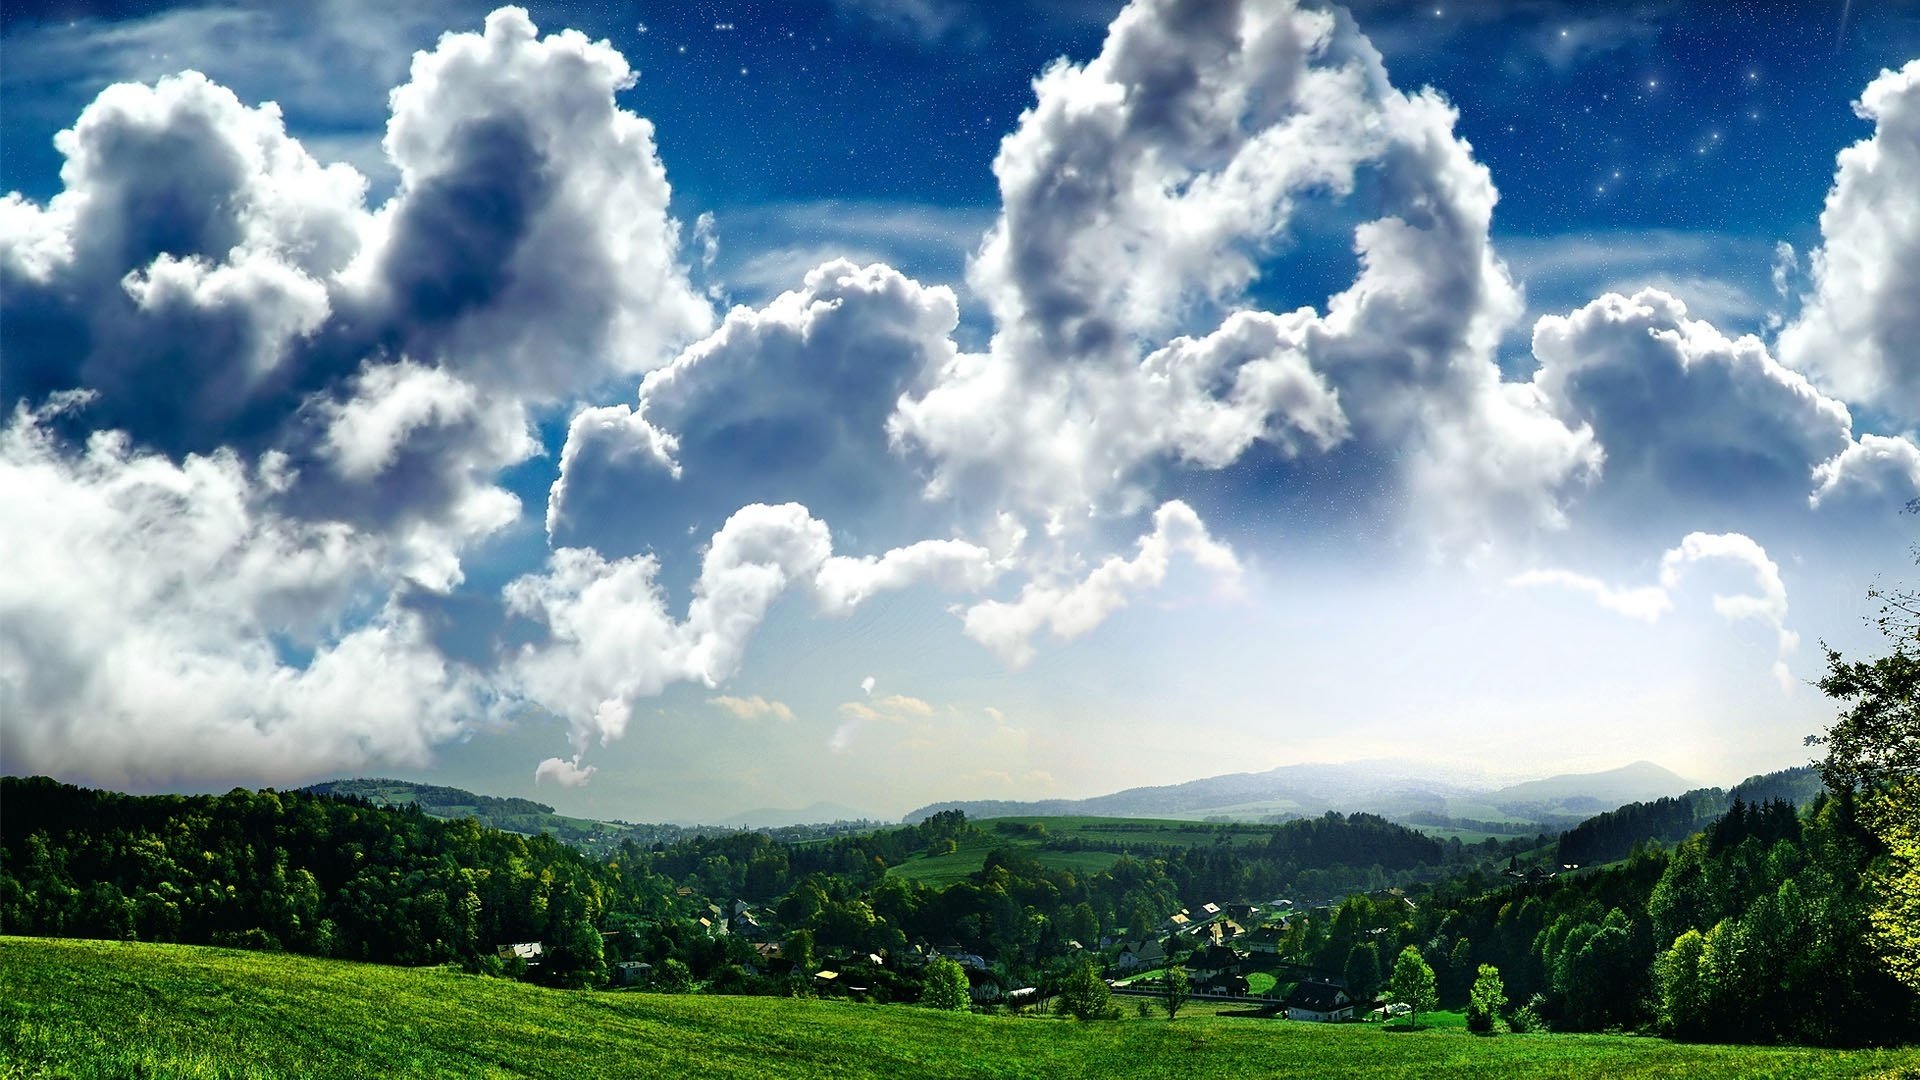 natur der berge verdrehte wolken wald himmel feld wolken grün gras wiese vegetation natur landschaft